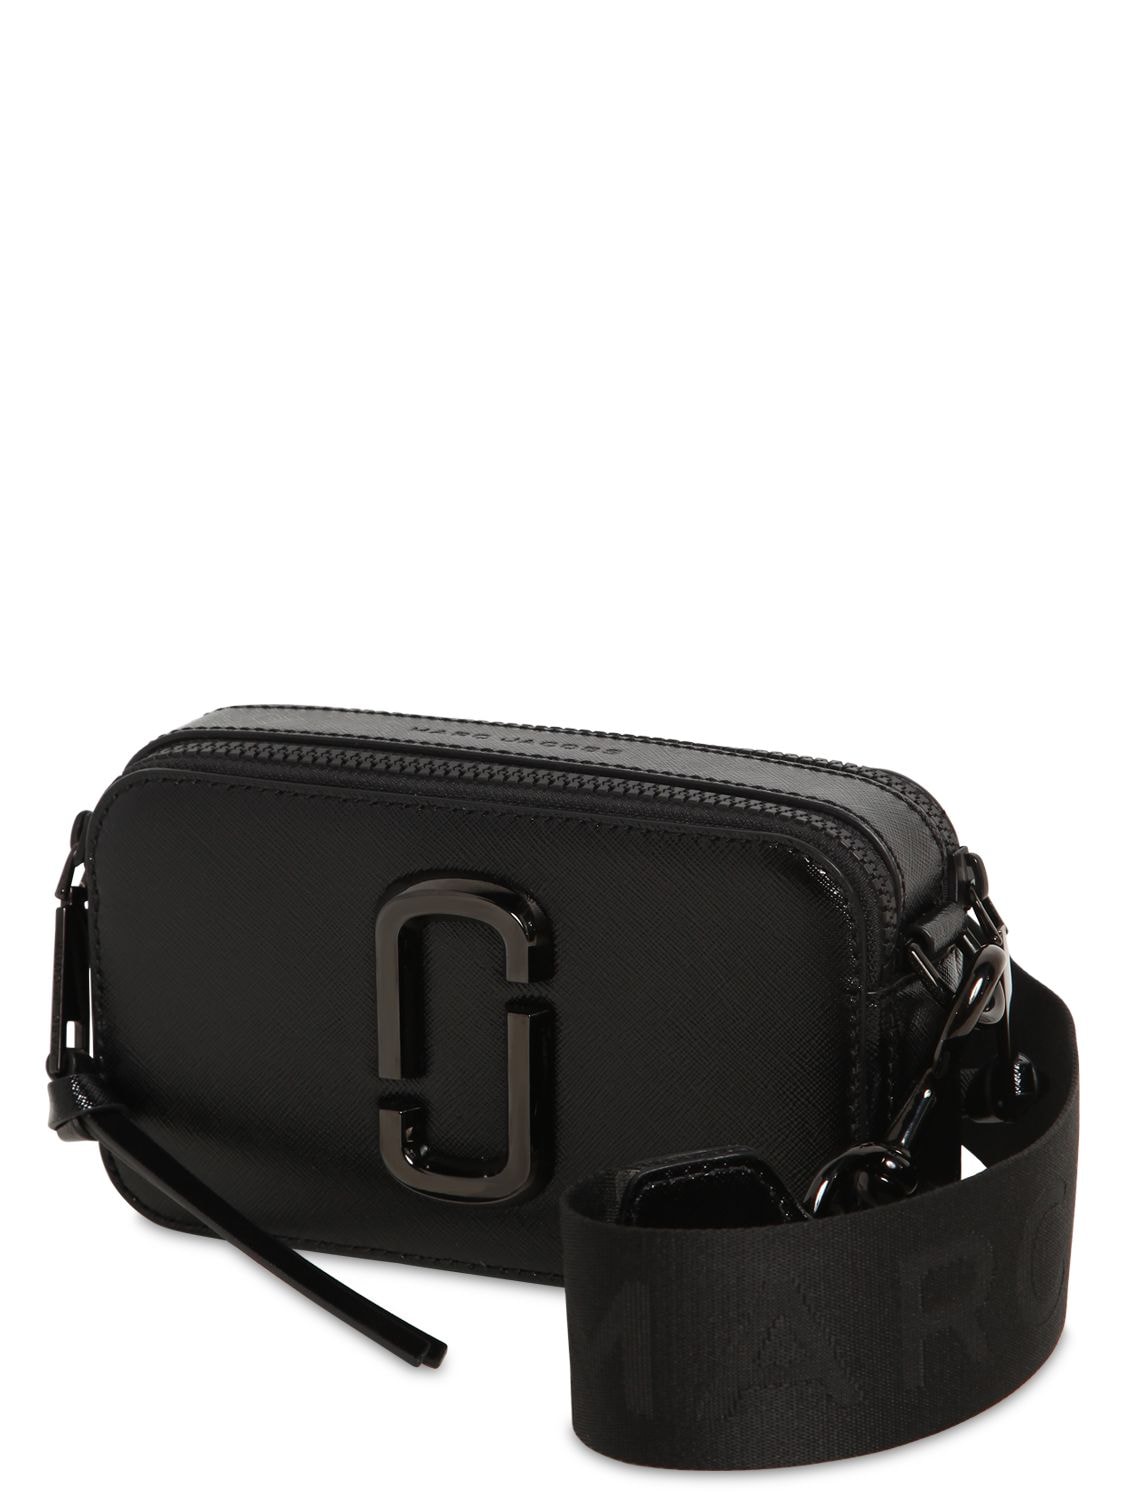 Marc Jacobs The Snapshot DTM  Black leather handbags, Marc jacobs, Leather  crossbody bag